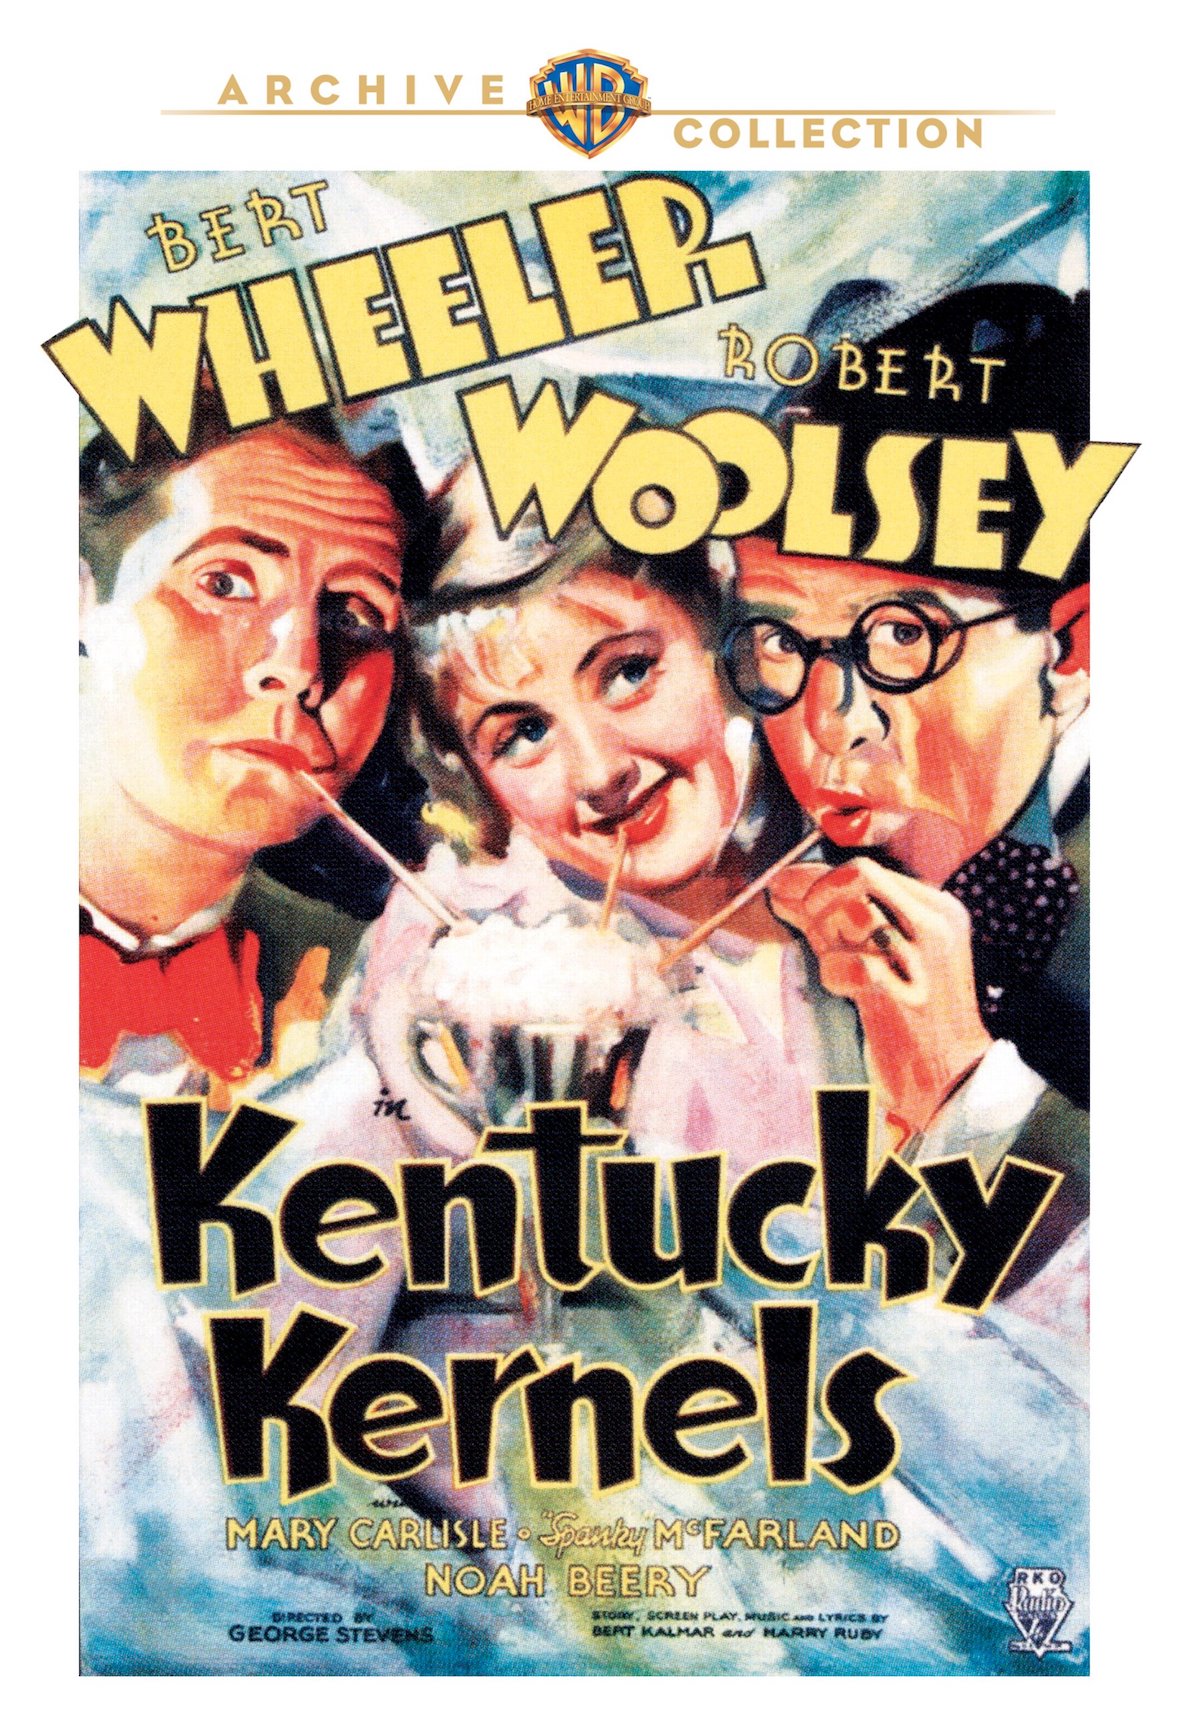 Kentucky Kernels (1934) starring Bert Wheeler, Robert Woolsey, Mary Carlisle, Spanky McFarland